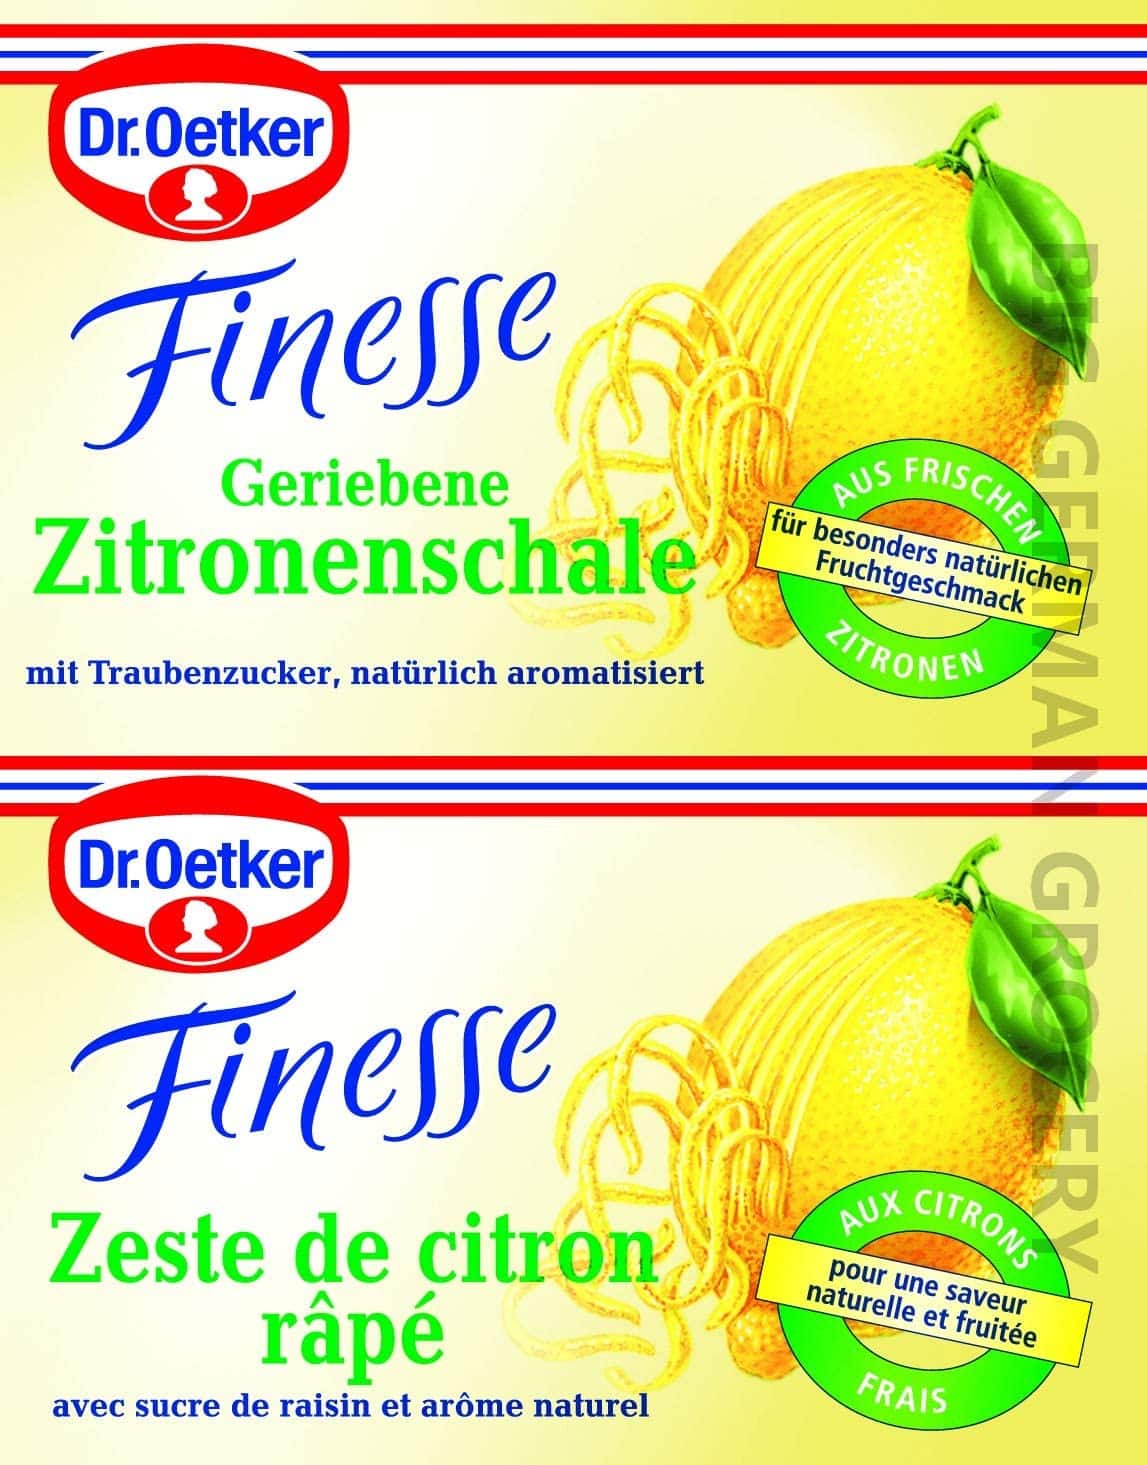 Dr. Oetker Finesse Geriebene Zitronenschale (grated lemon zest)